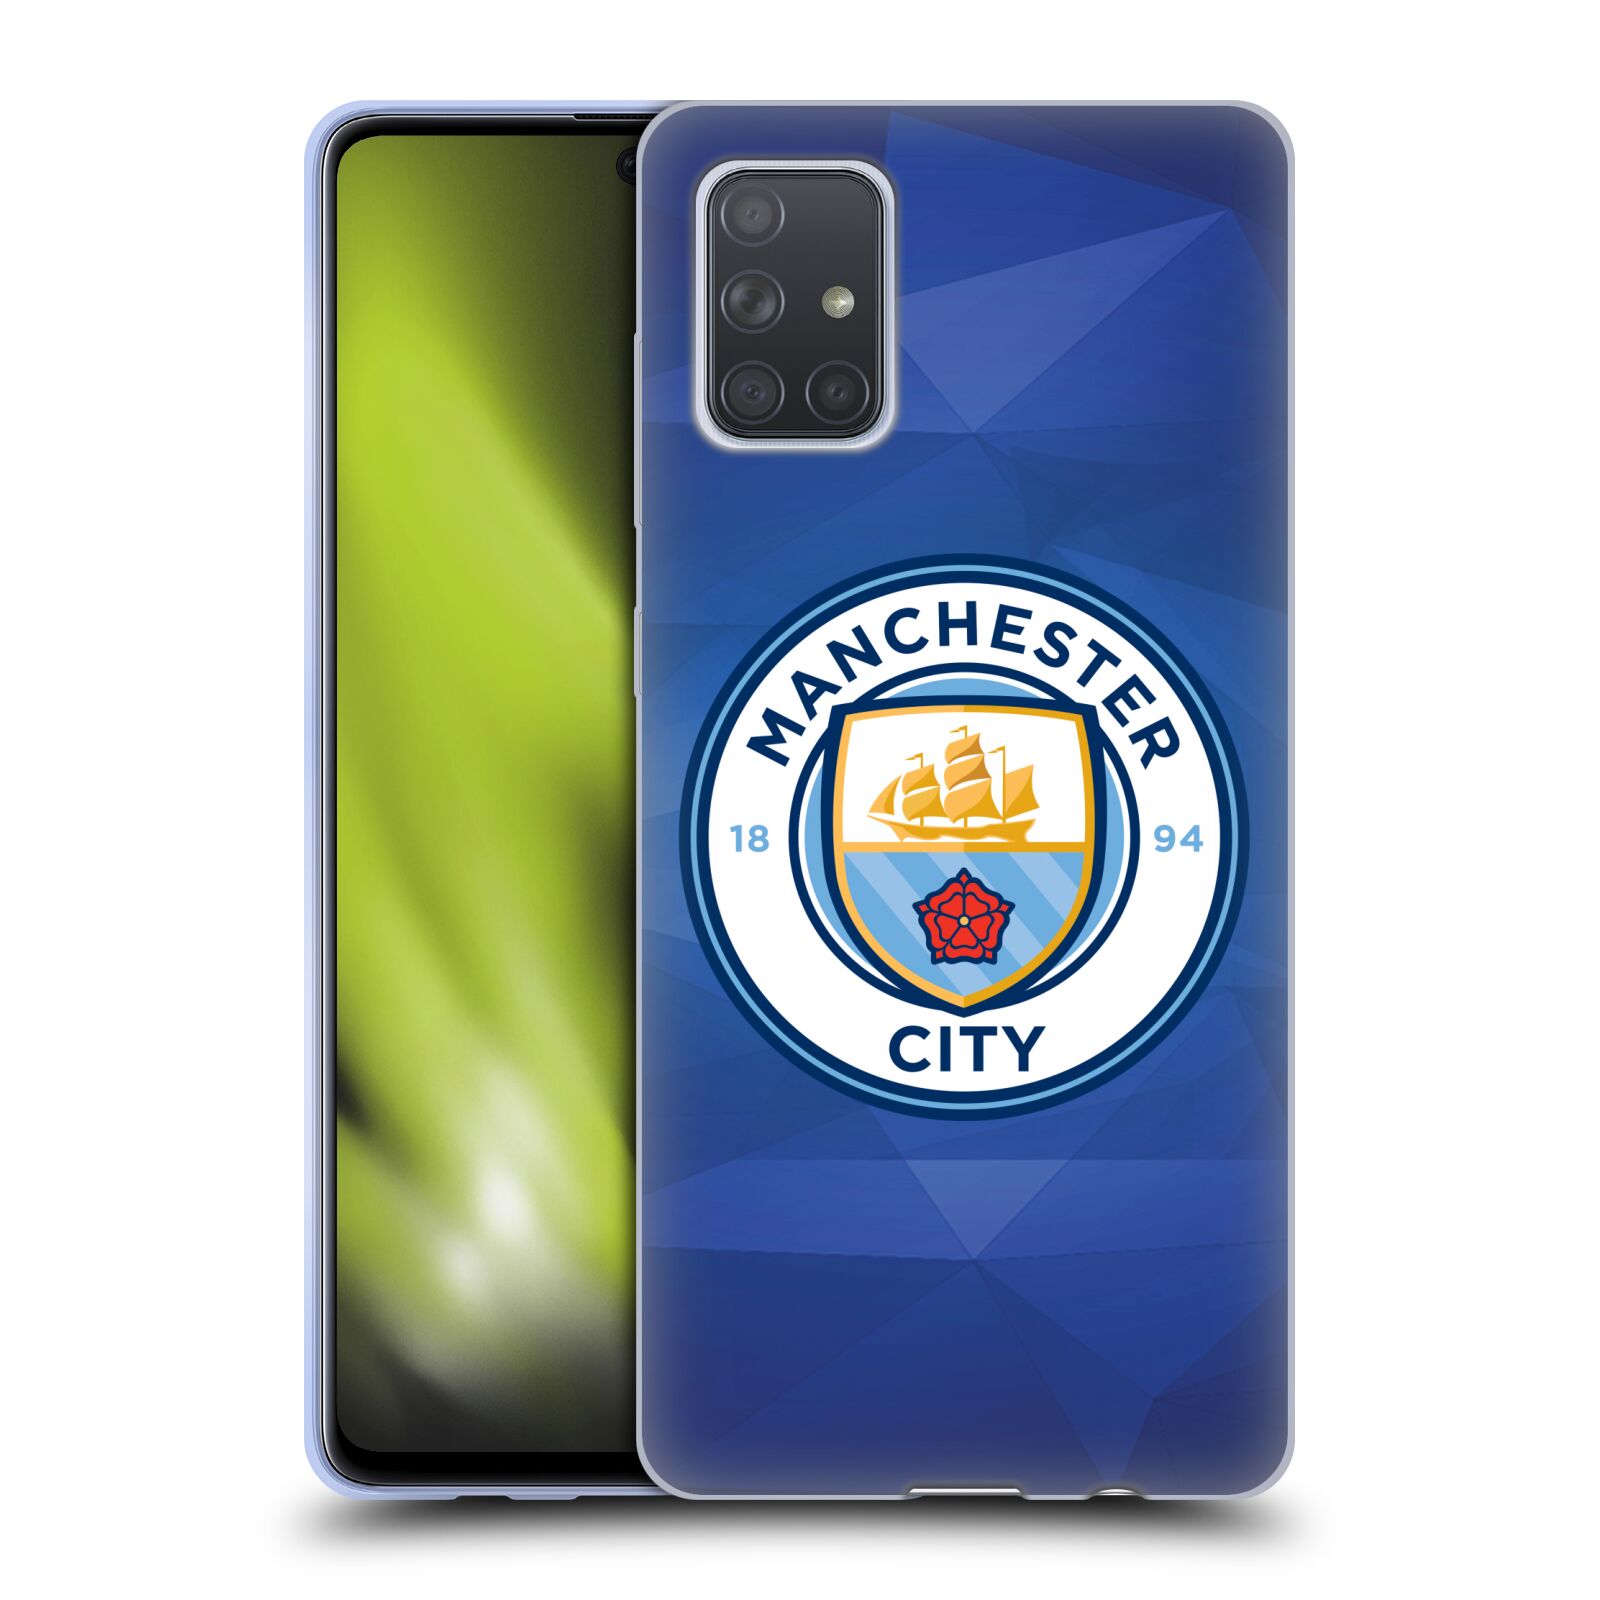 Silikonové pouzdro na mobil Samsung Galaxy A71 - Head Case - Manchester City FC - Modré nové logo (Silikonový kryt, obal, pouzdro na mobilní telefon Samsung Galaxy A71 A715F Dual SIM s motivem Manchester City FC - Modré nové logo)